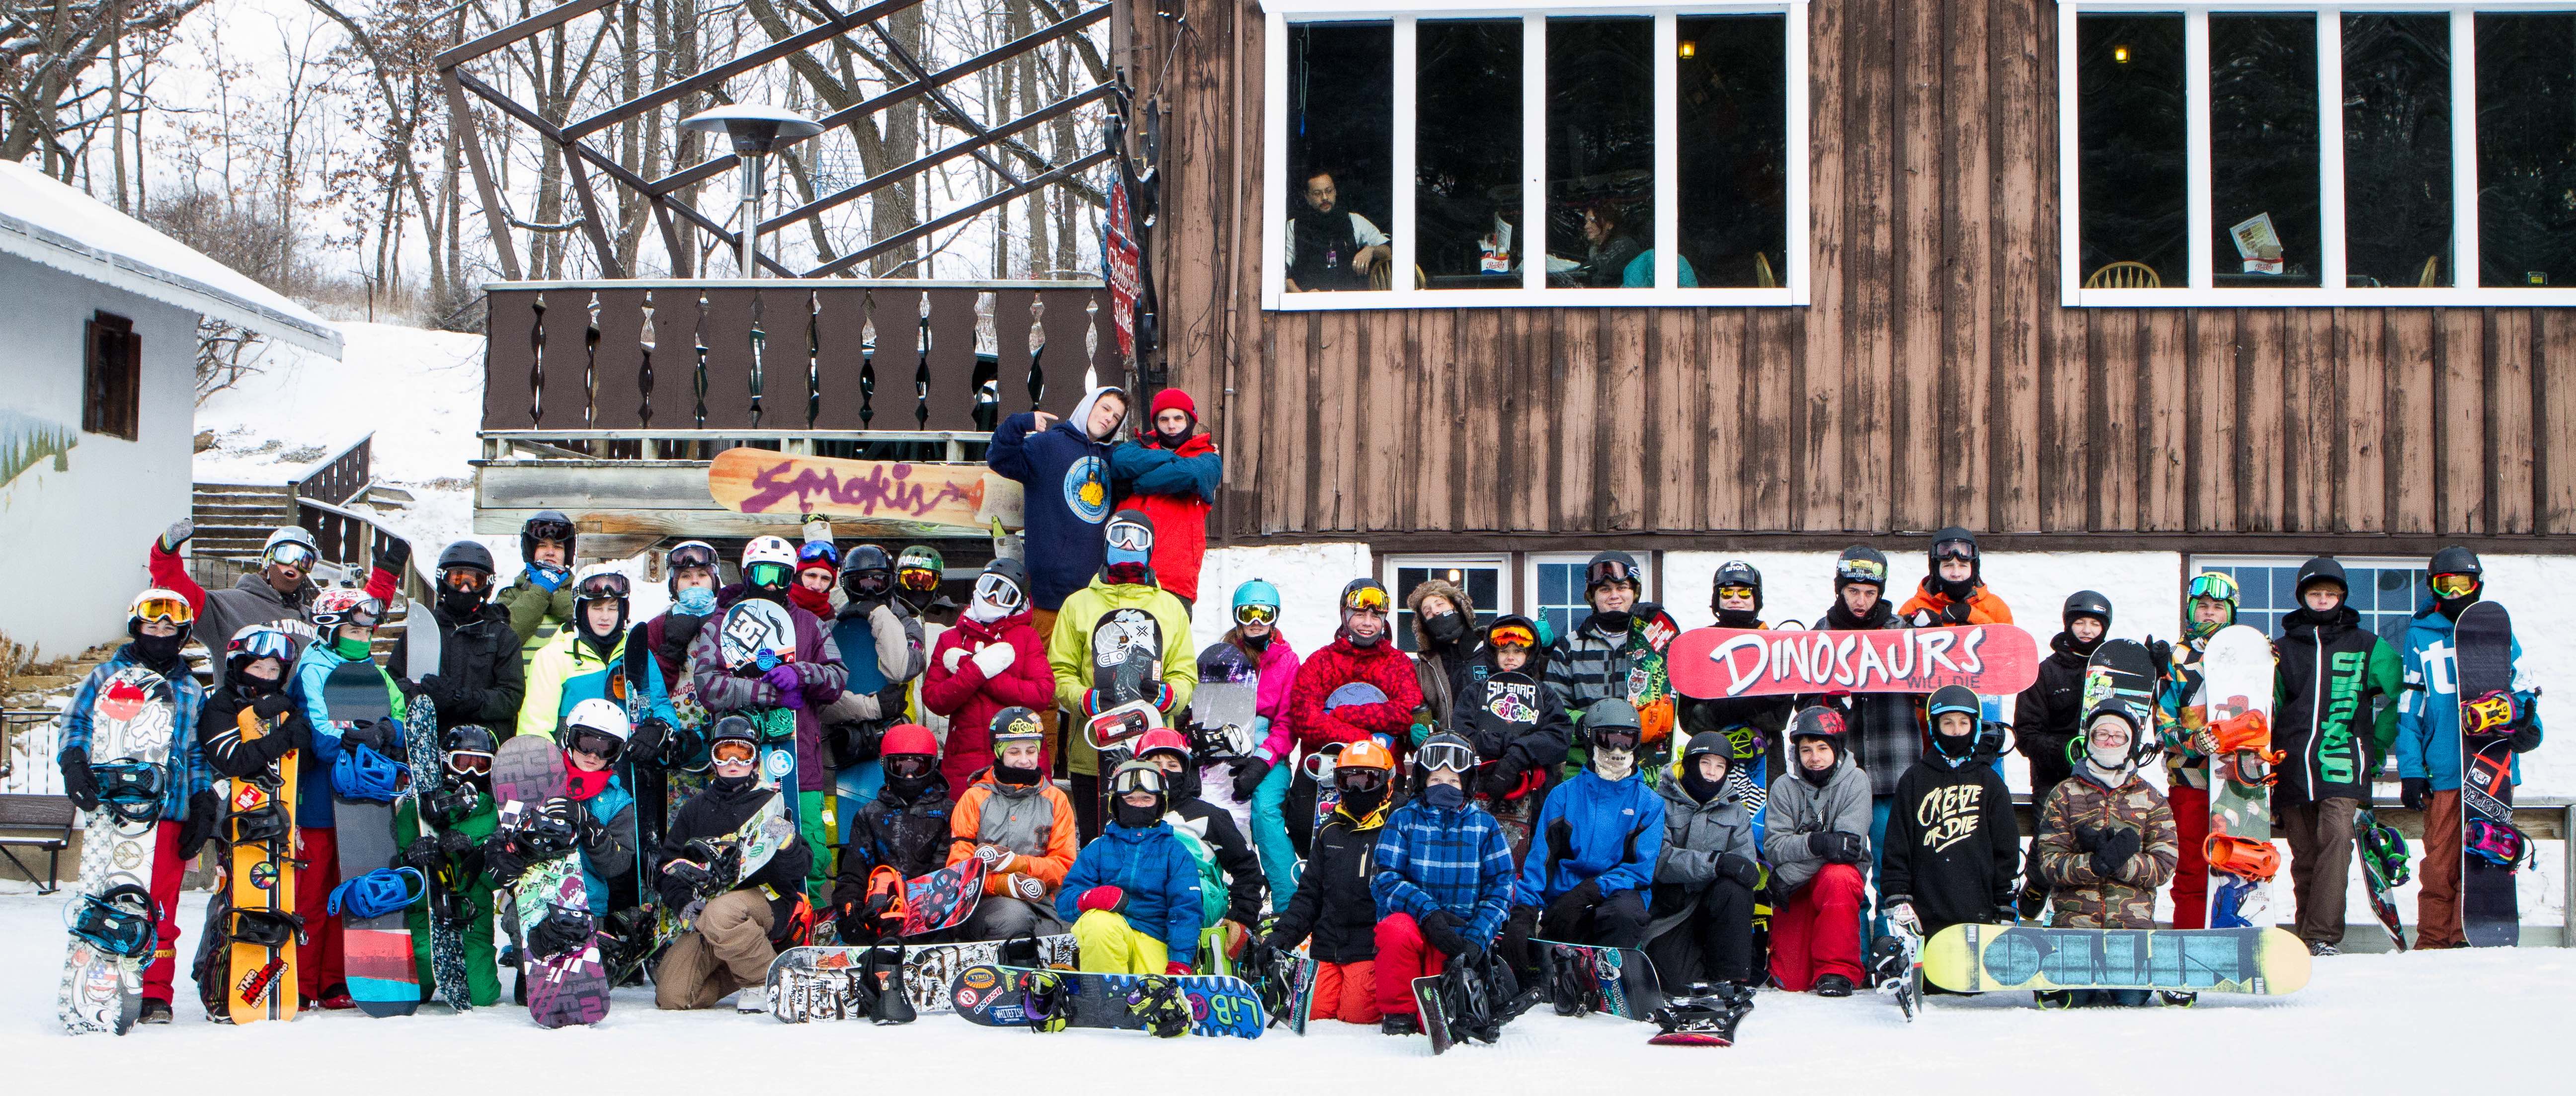 The 2013 Snowboard Camp Tour